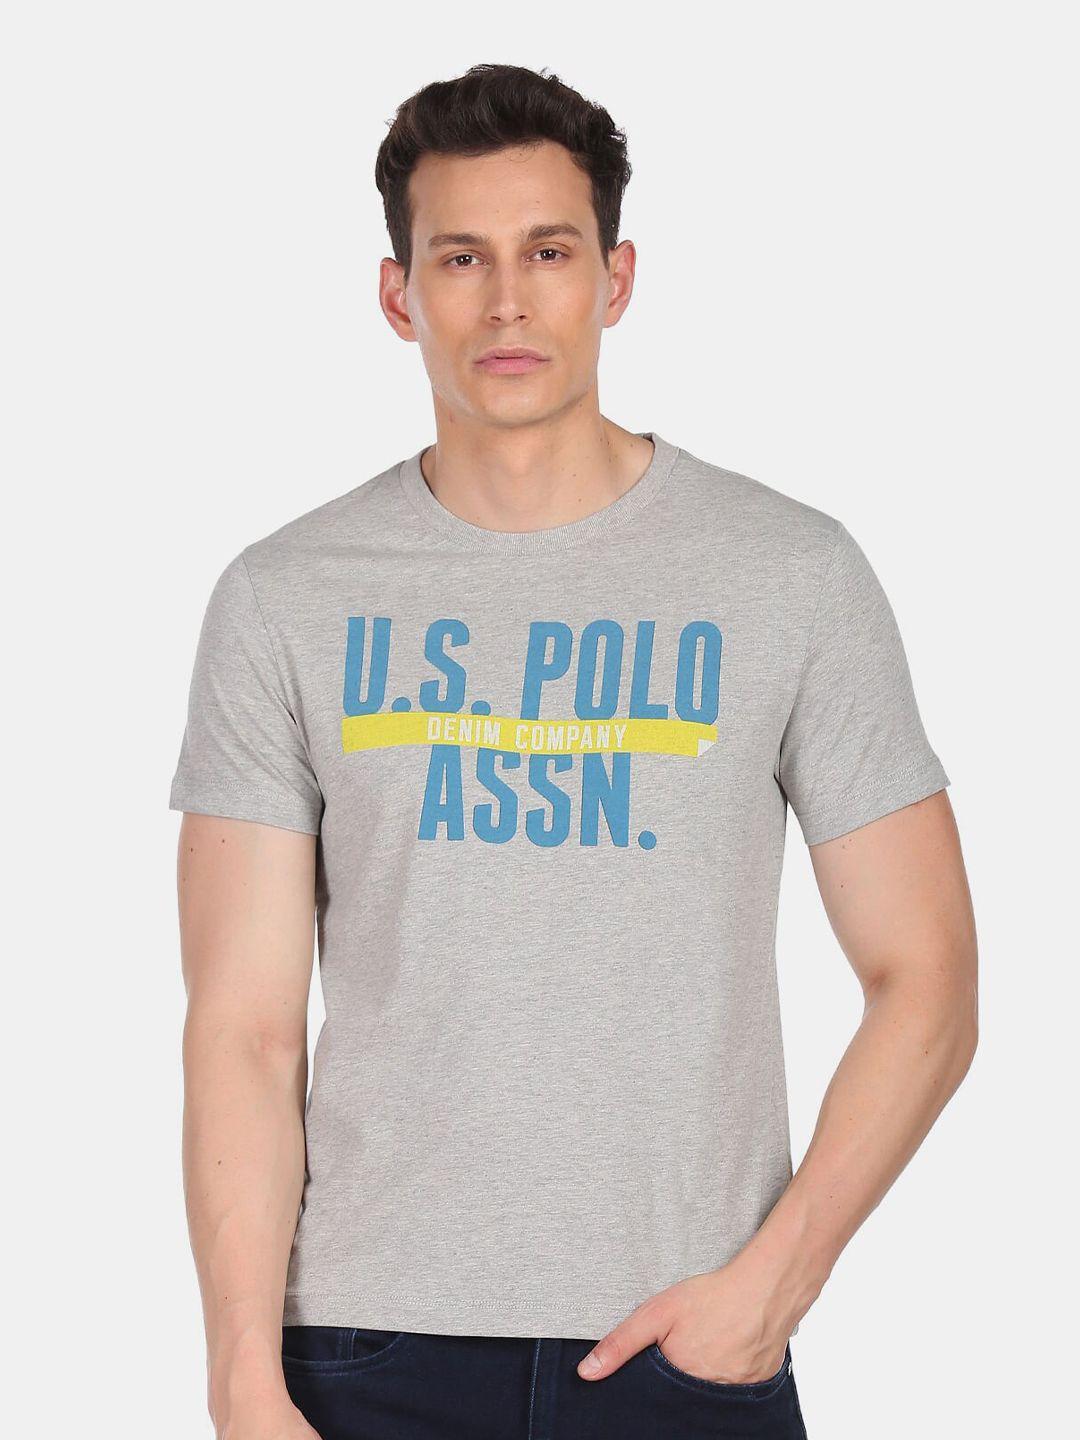 u.s. polo assn. denim co.men grey printed applique t-shirt